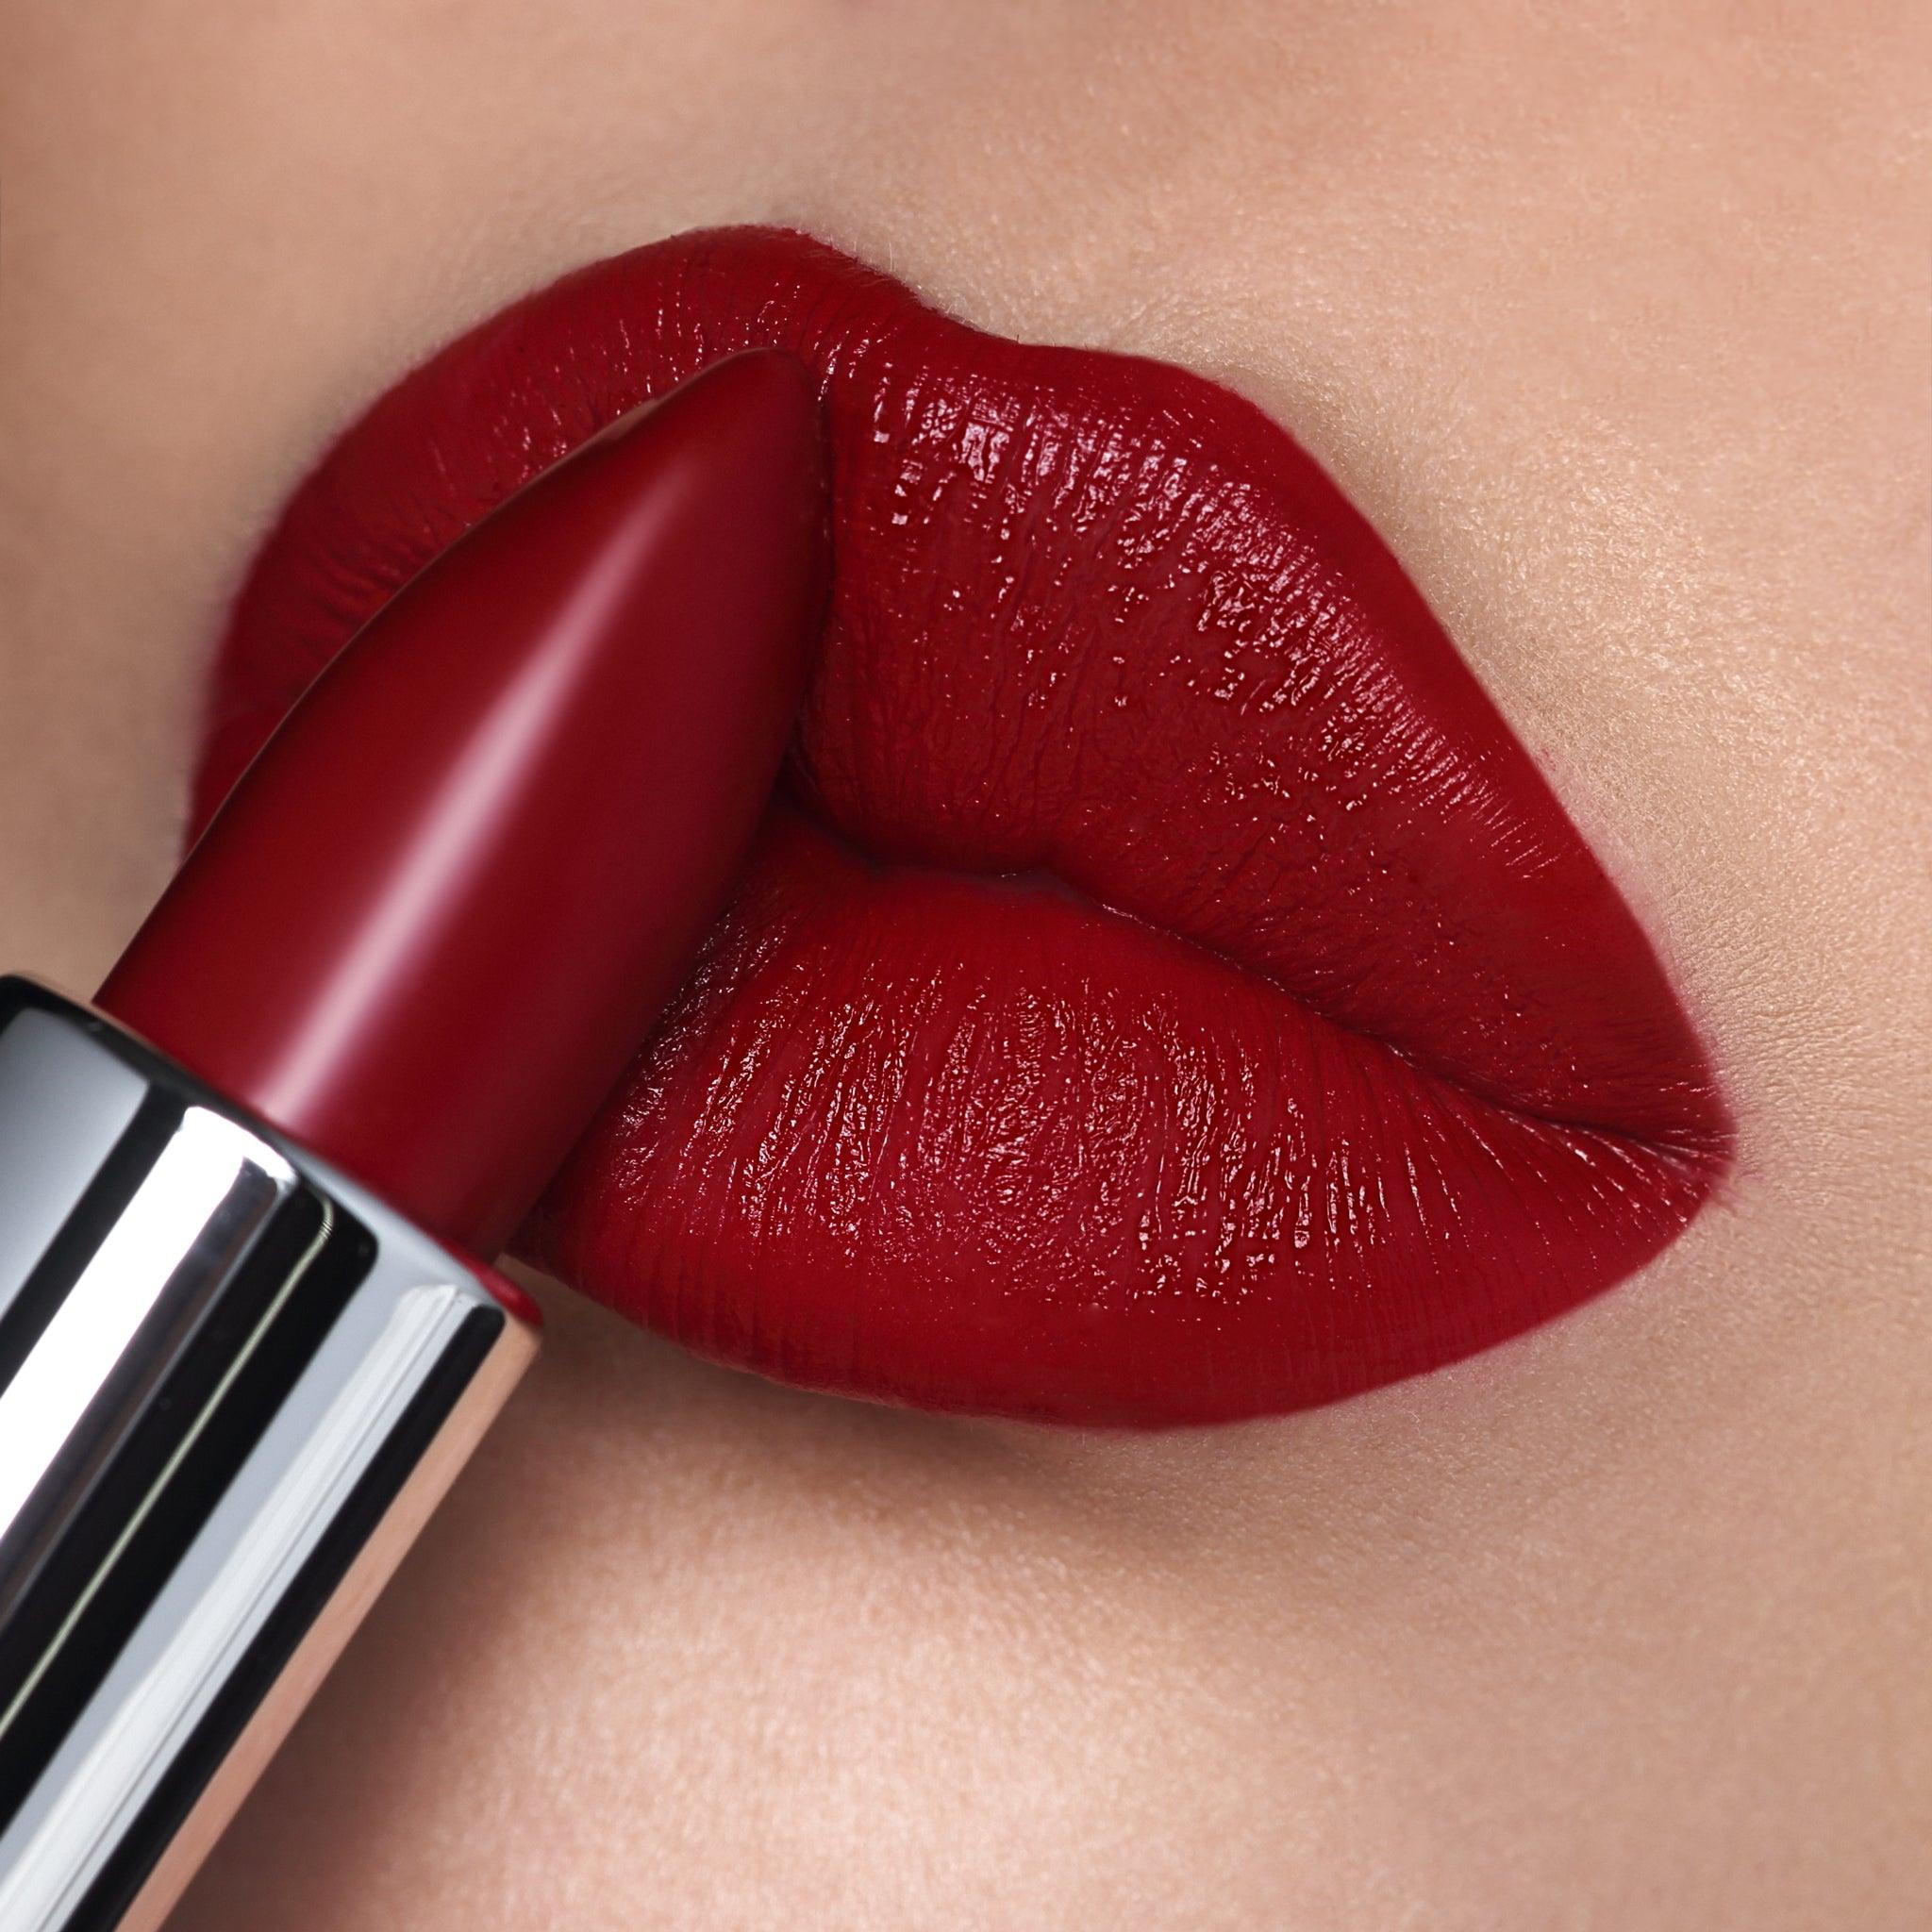 Celeb | A Rich Berry Red Matte Lipstick